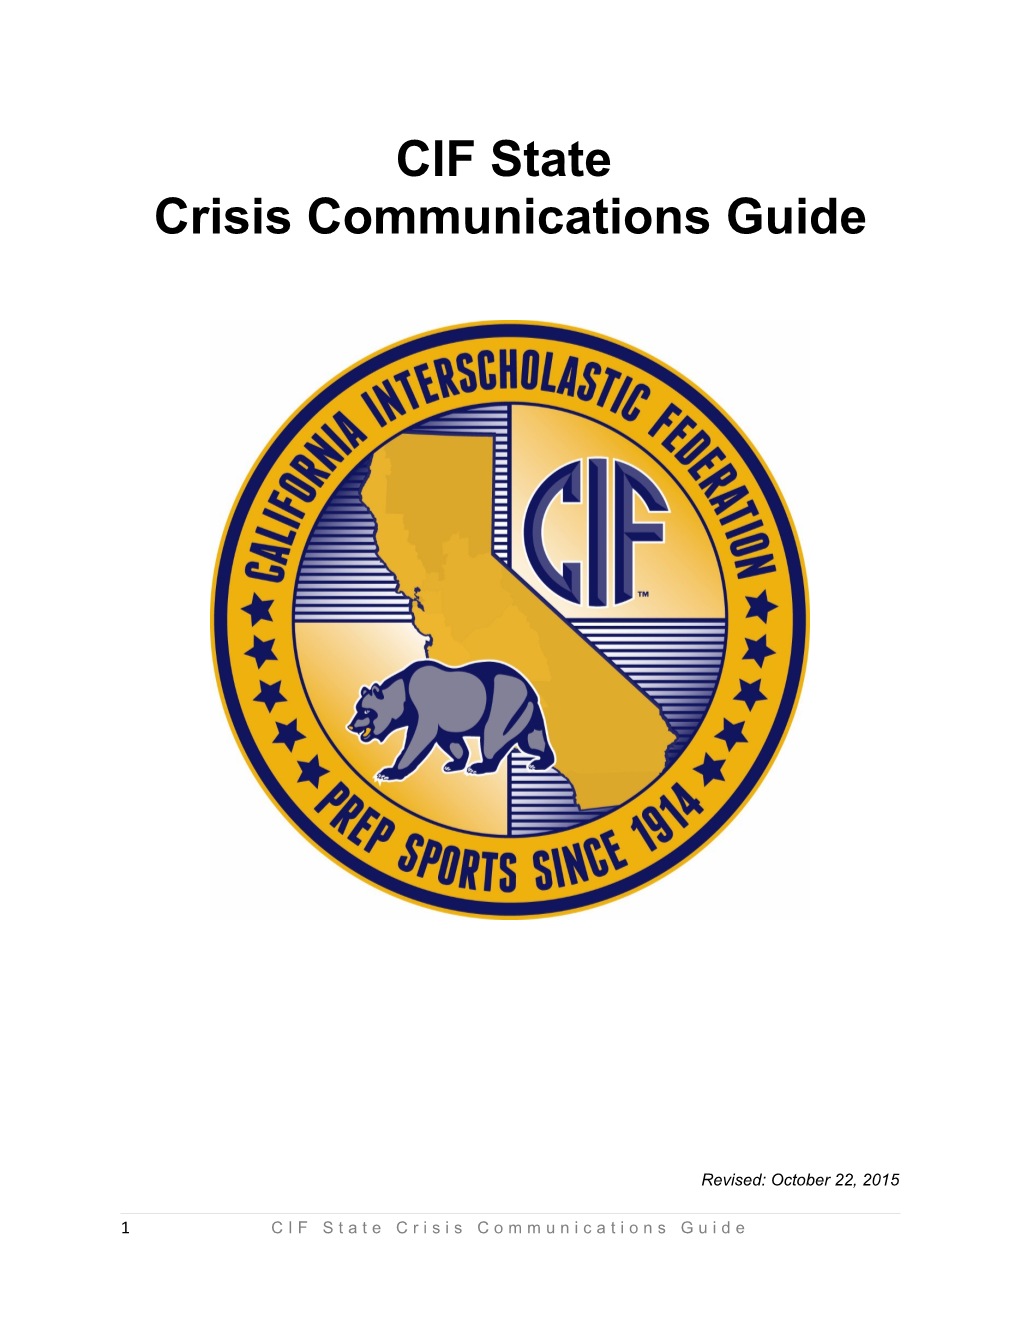 Crisis Communications Guide